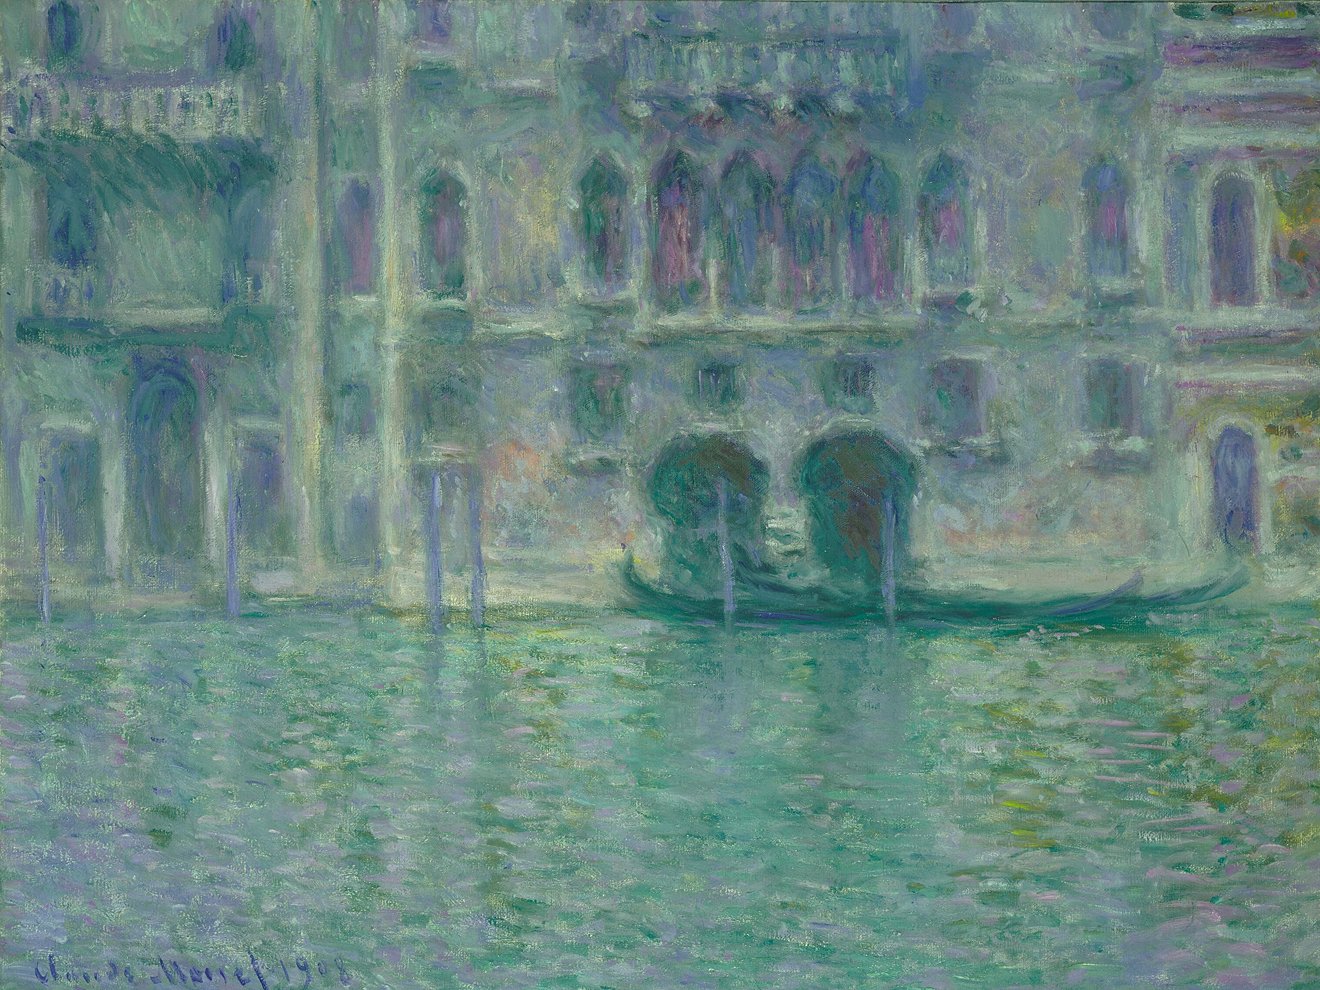 Claude+Monet-1840-1926 (563).jpg